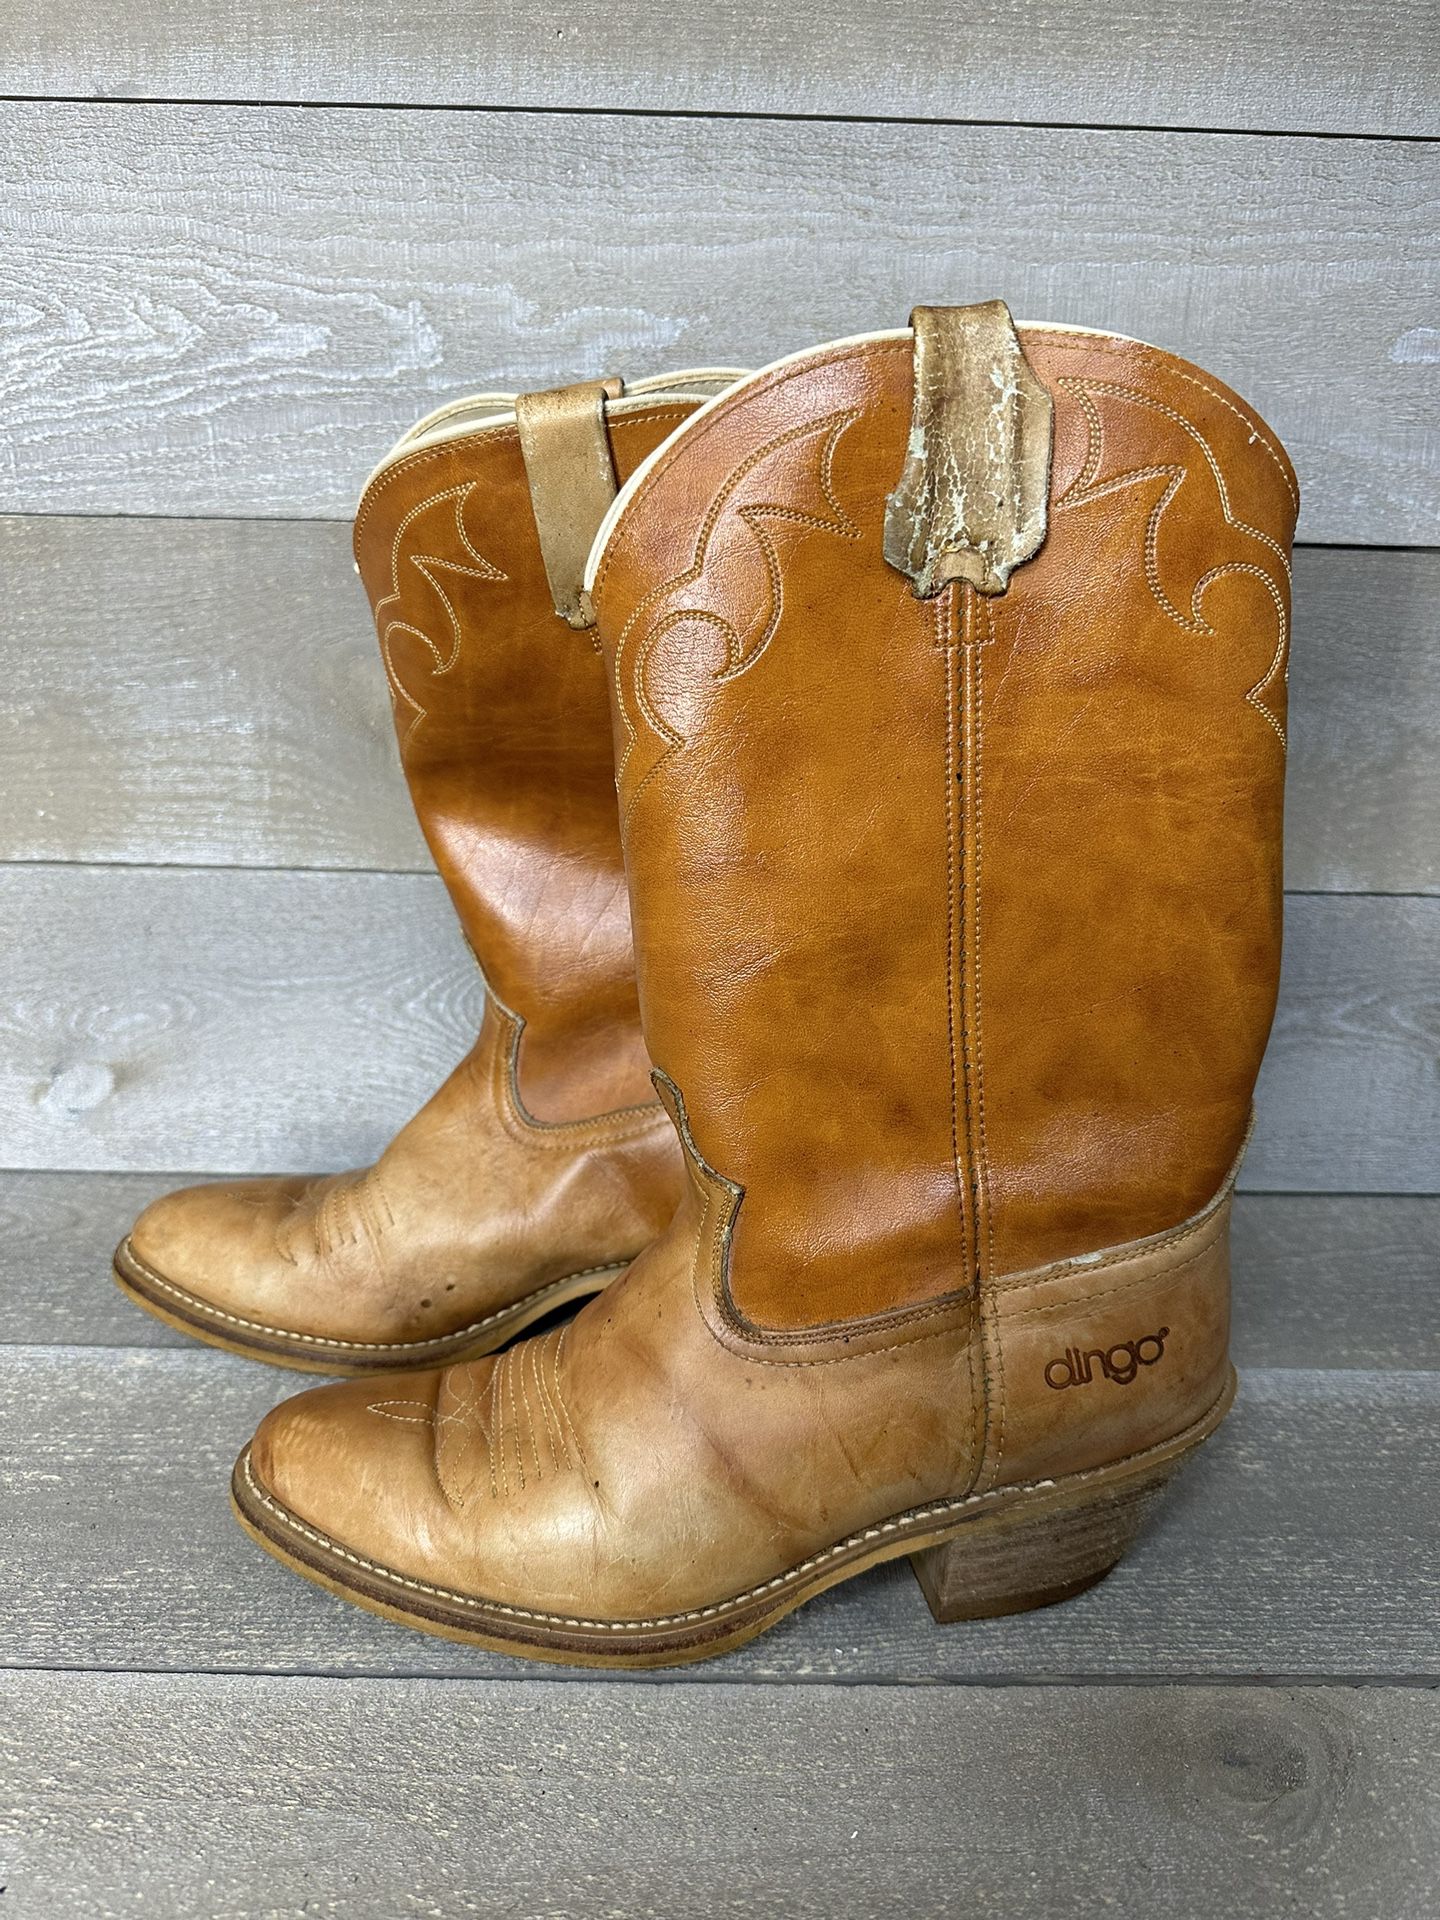 Vintage Acme Dingo Cowboy Western Pull On Boots Men’s 10 D Brown Leather 5907